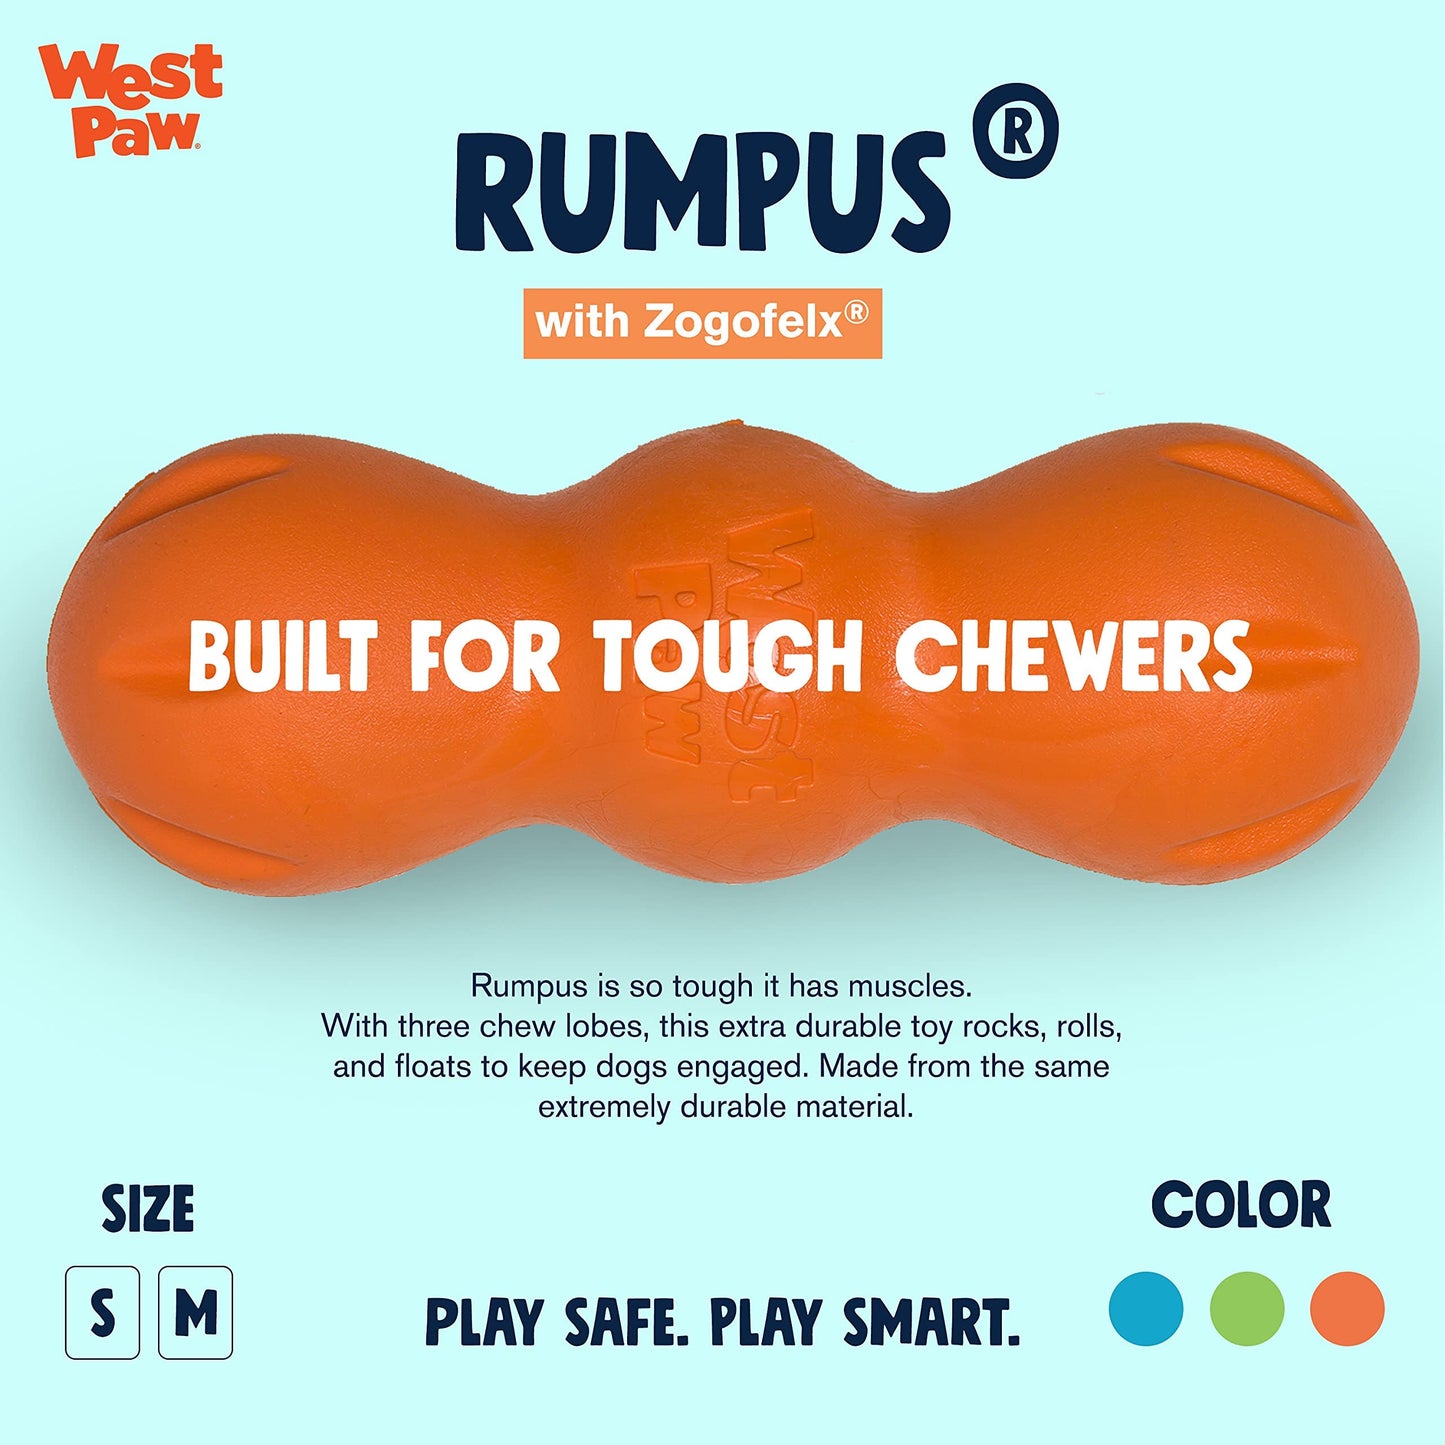 West Paw - Rumpus